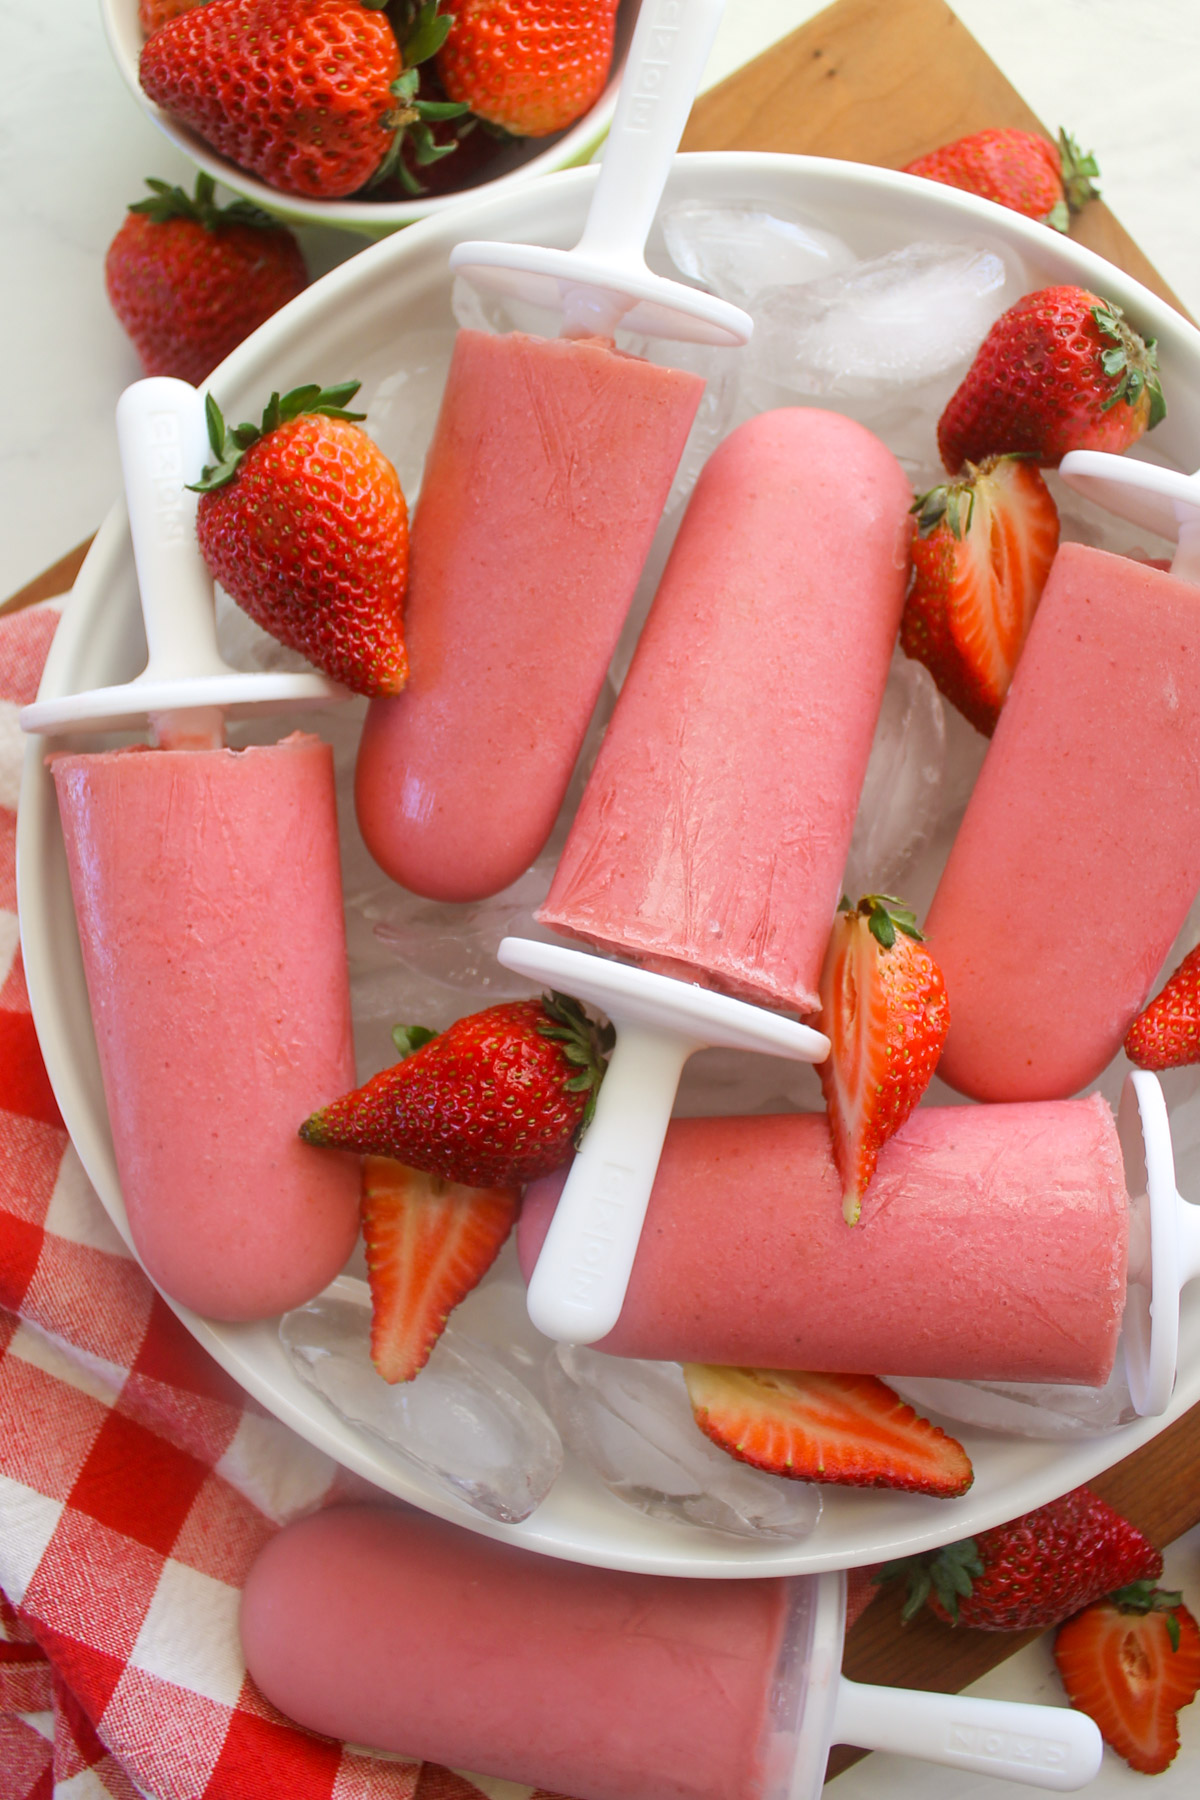 Frozen yogurt strawberry popsicles and fresh strawberries.